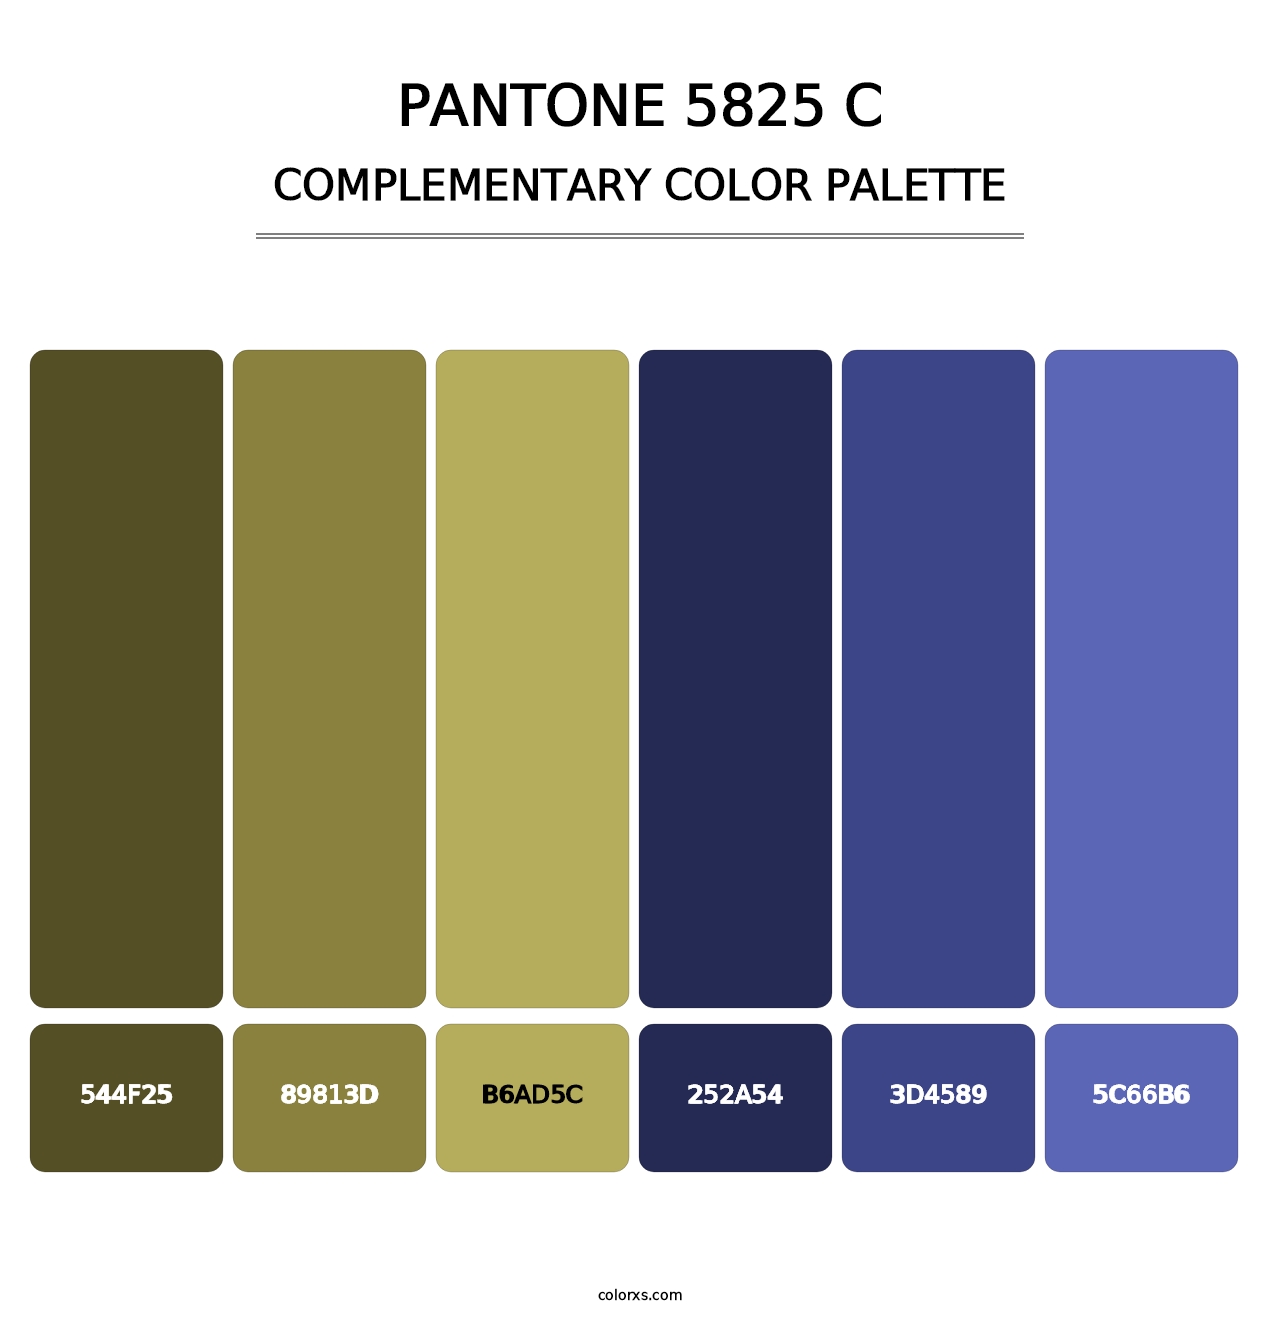 PANTONE 5825 C - Complementary Color Palette